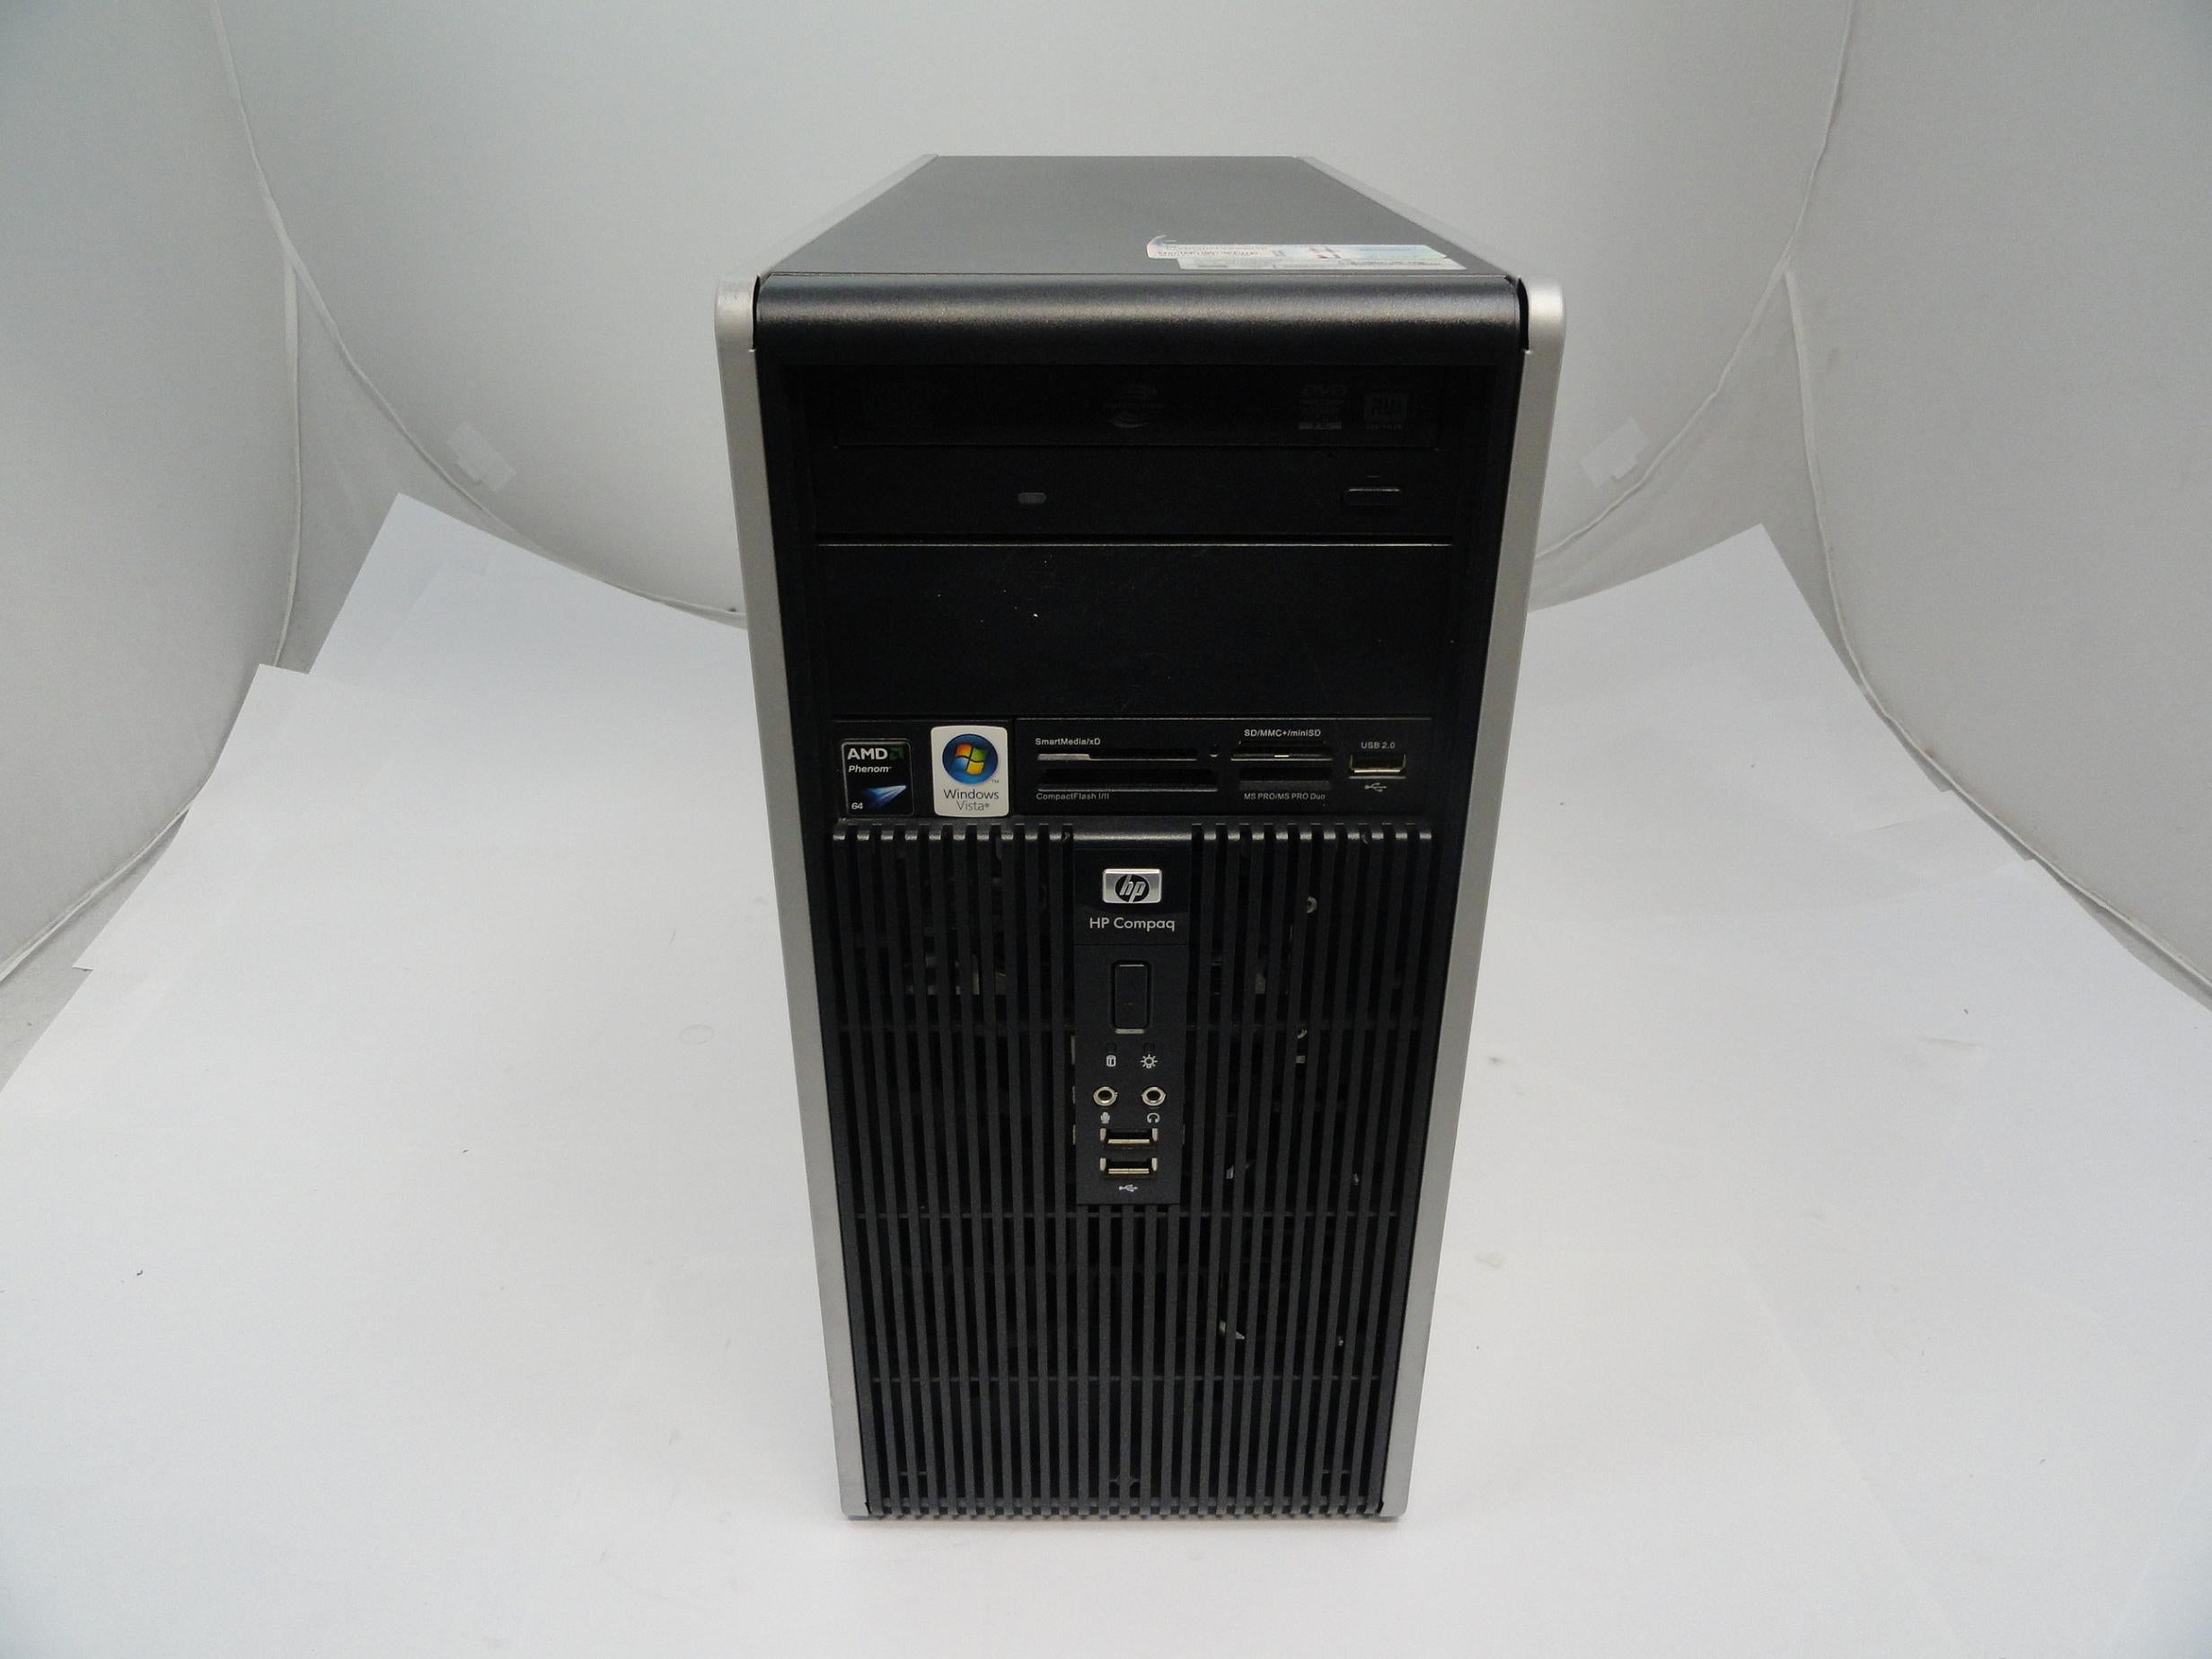 PR16342_KK377ET#ABU_HP DC5800 Microtower Computer - Image2